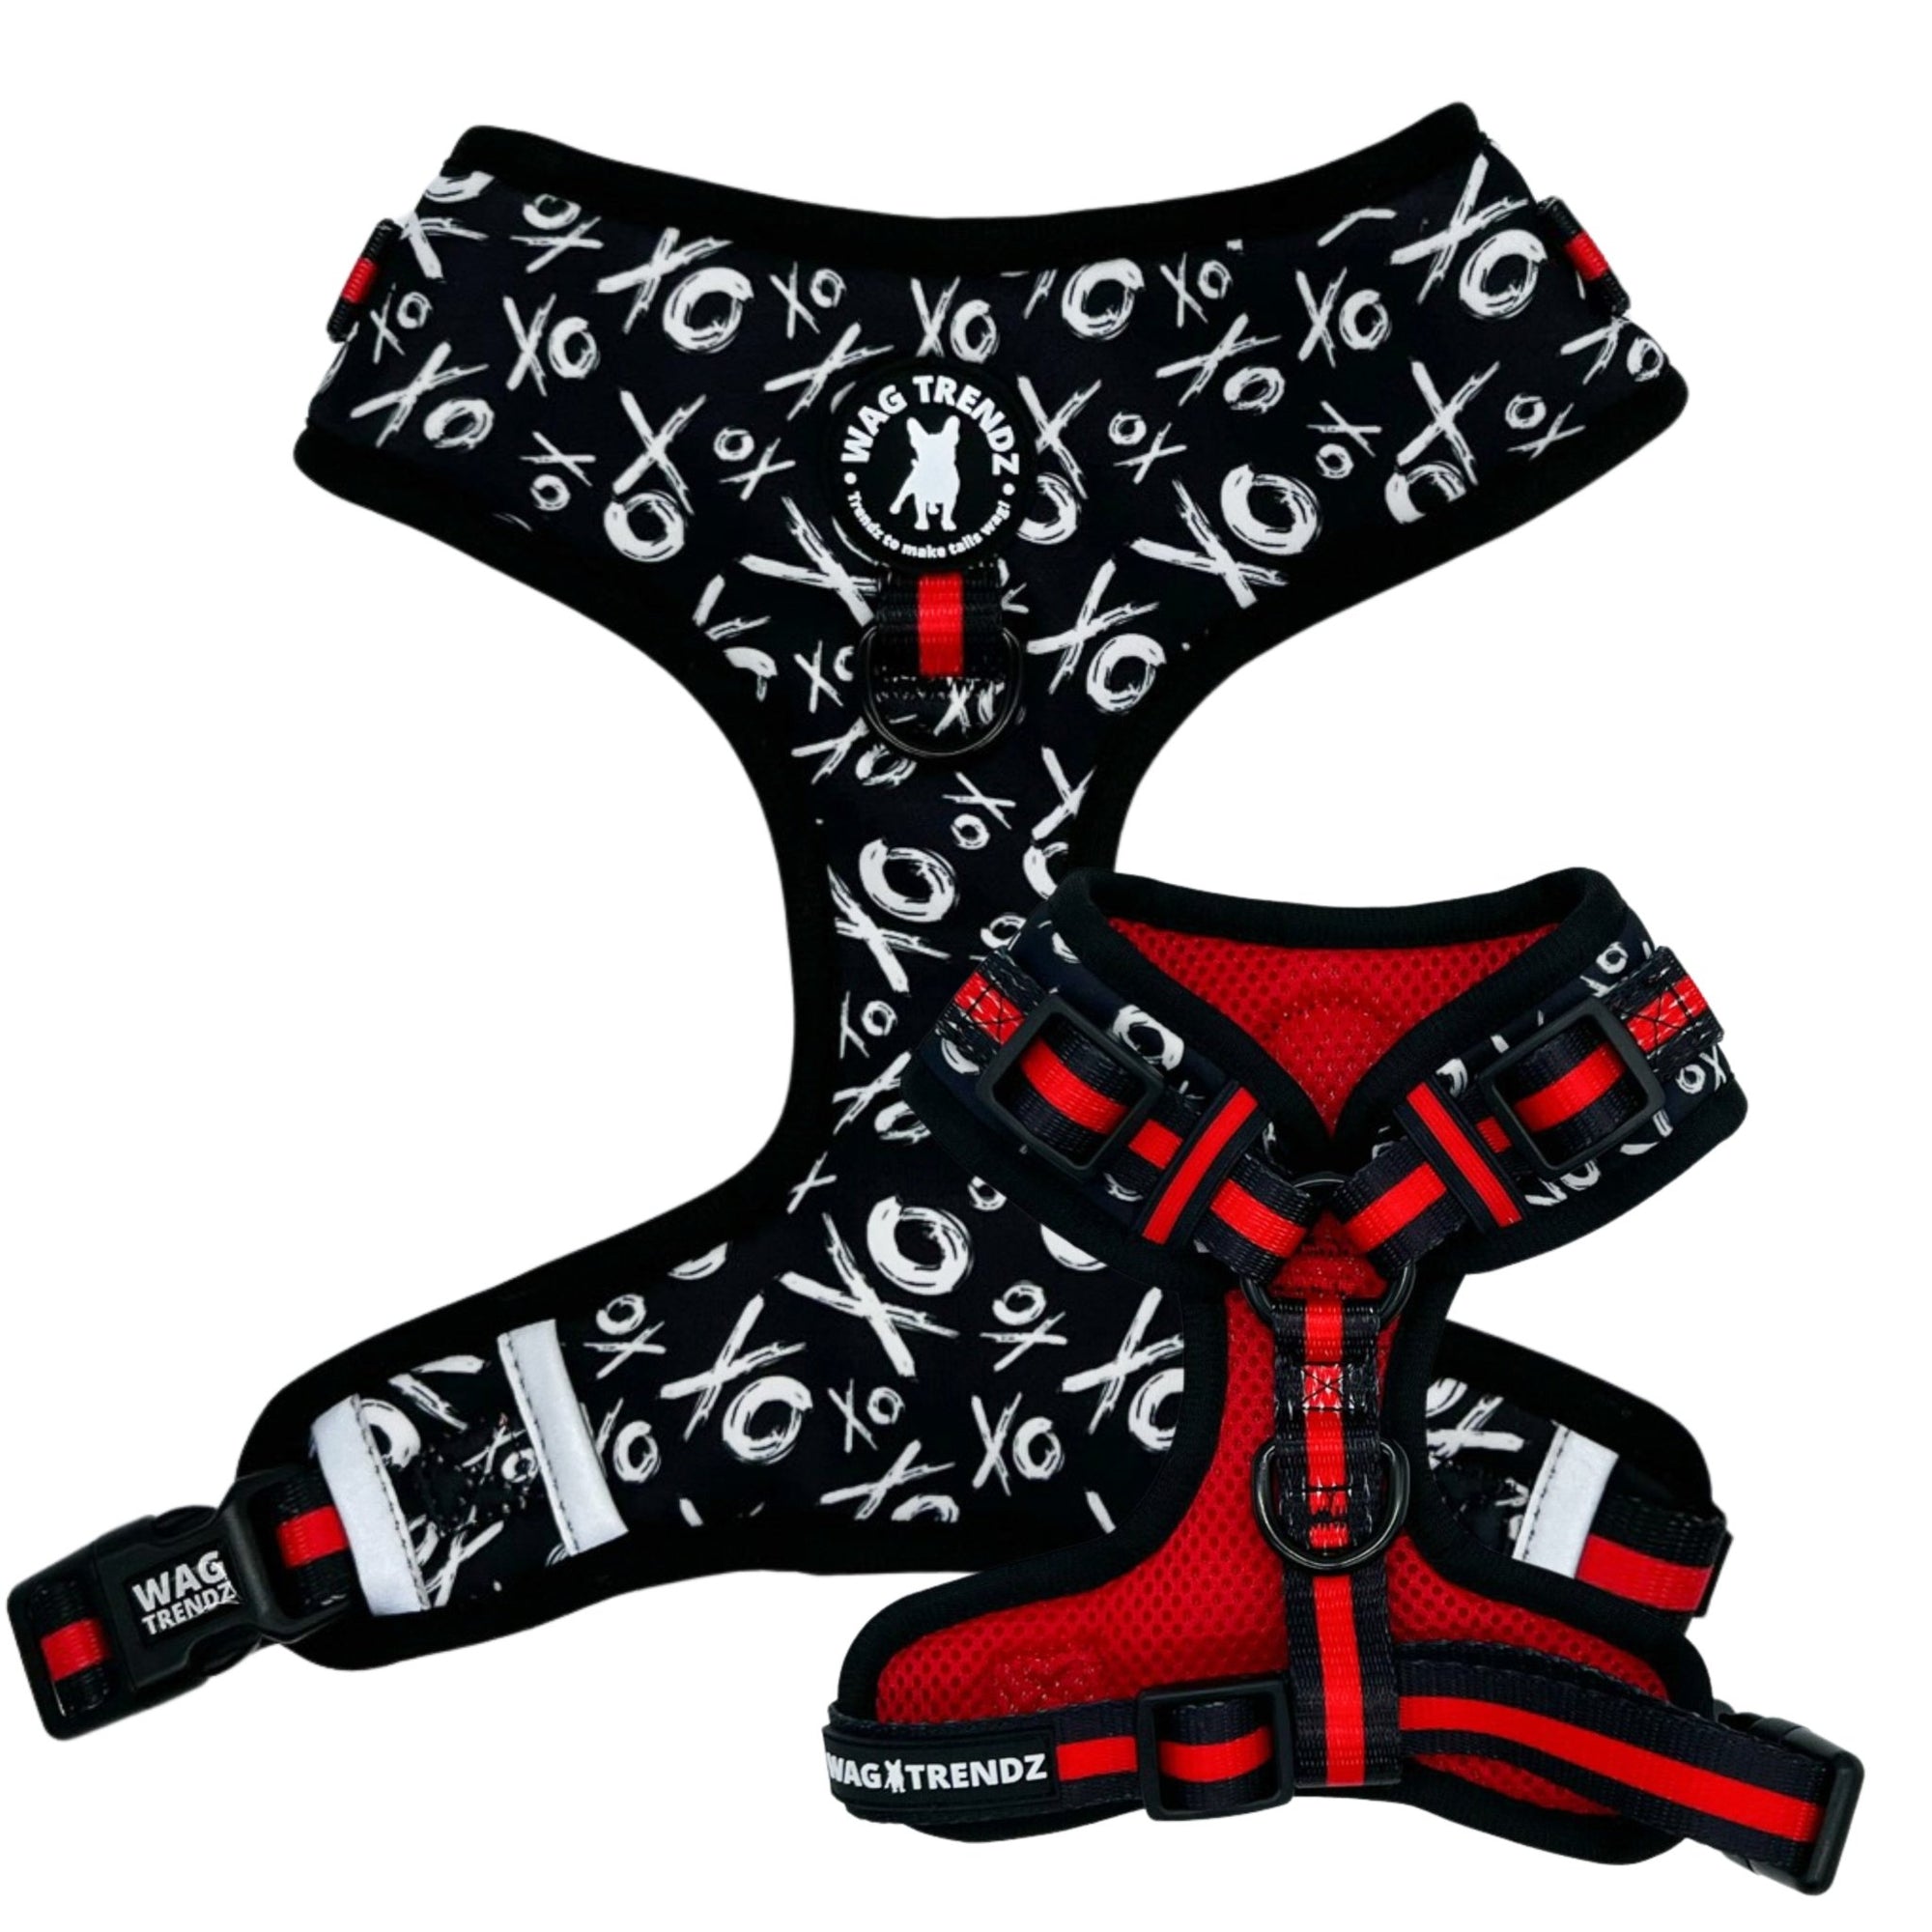 Dog Harness Vests - Adjustable - Front Clip - black with white XO&#39;s on a dog adjustable harness with red accents - front and back - Wag Trendz